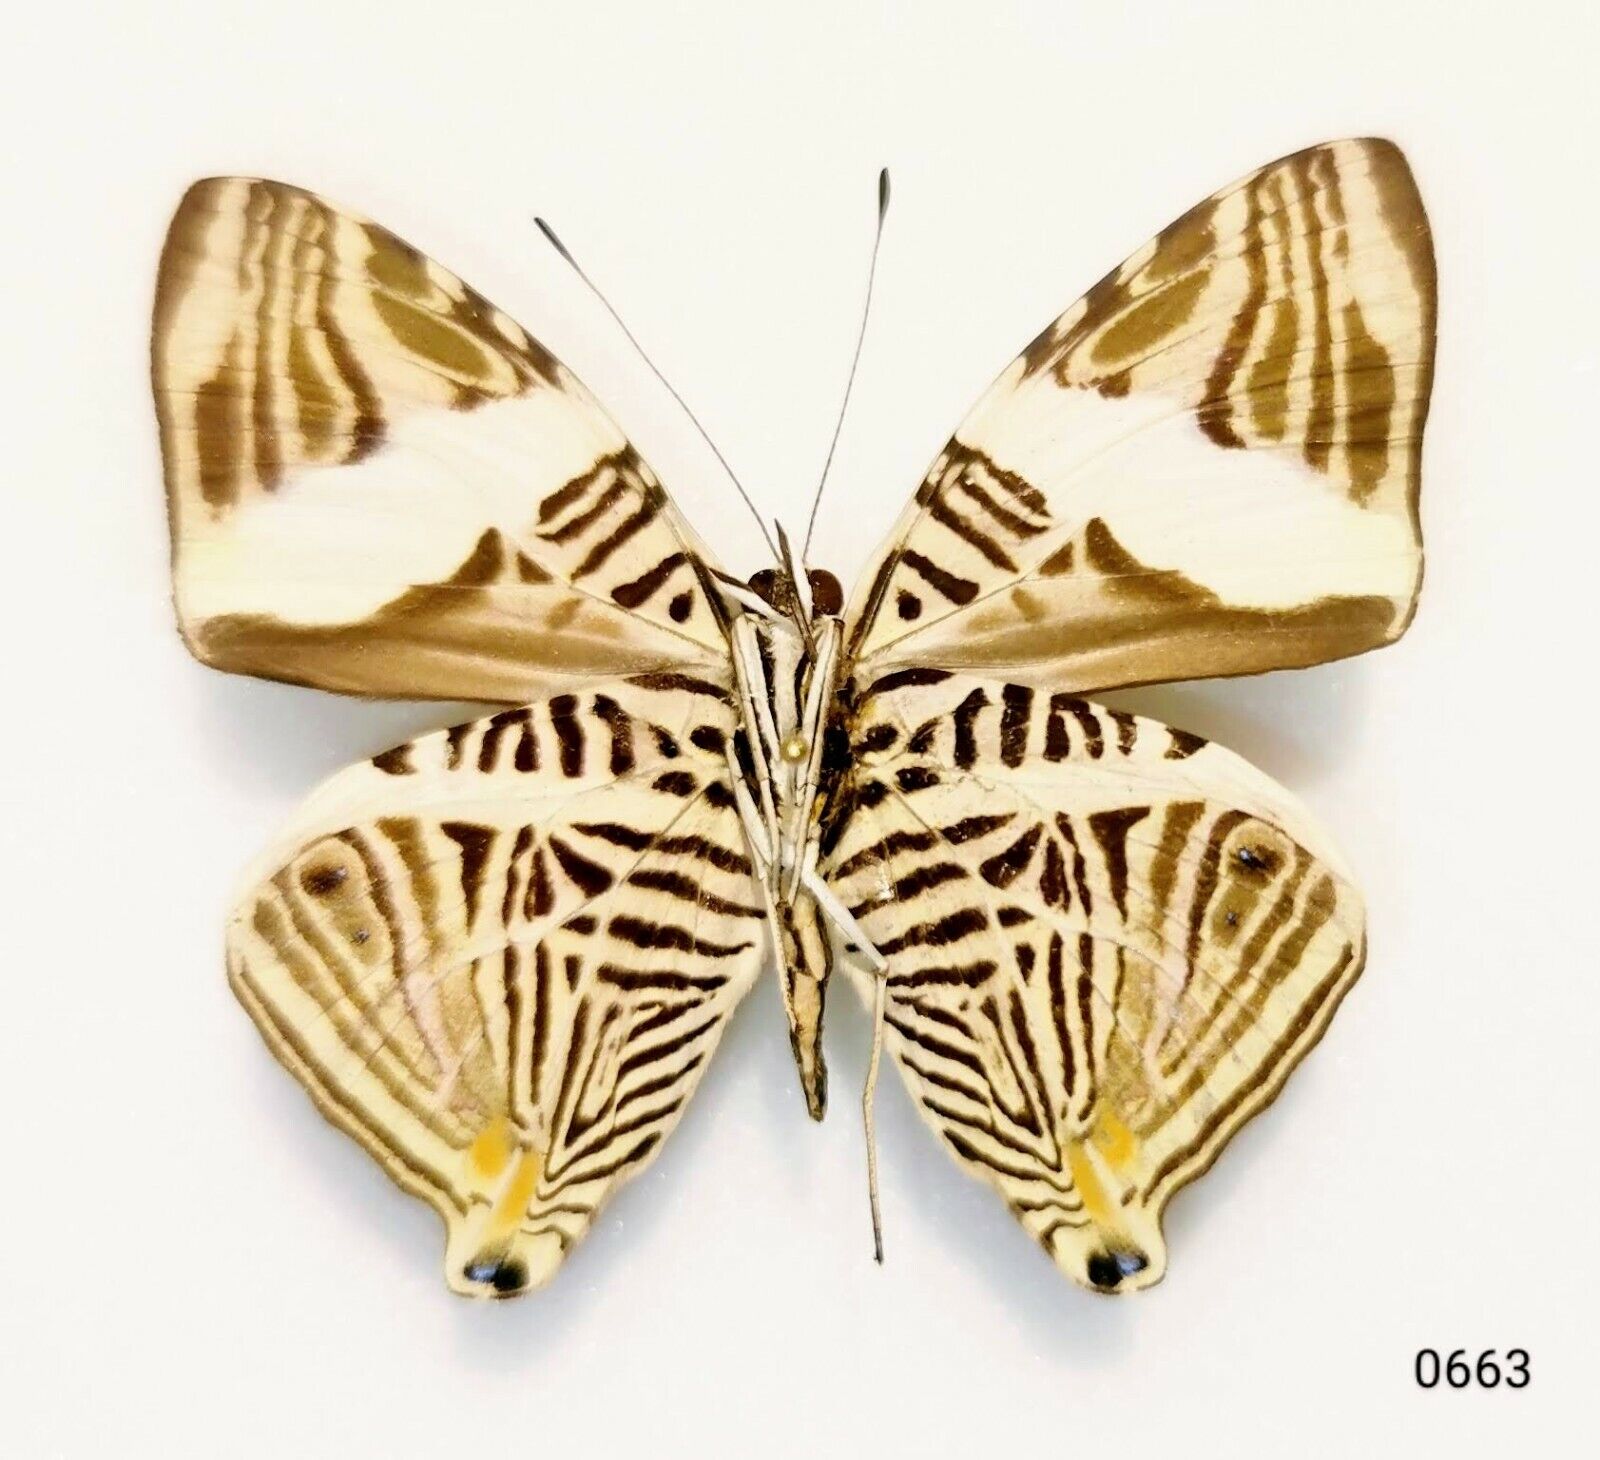 Nymphalidae Colobura dirce A1 from PERU - SELECTED - #0663